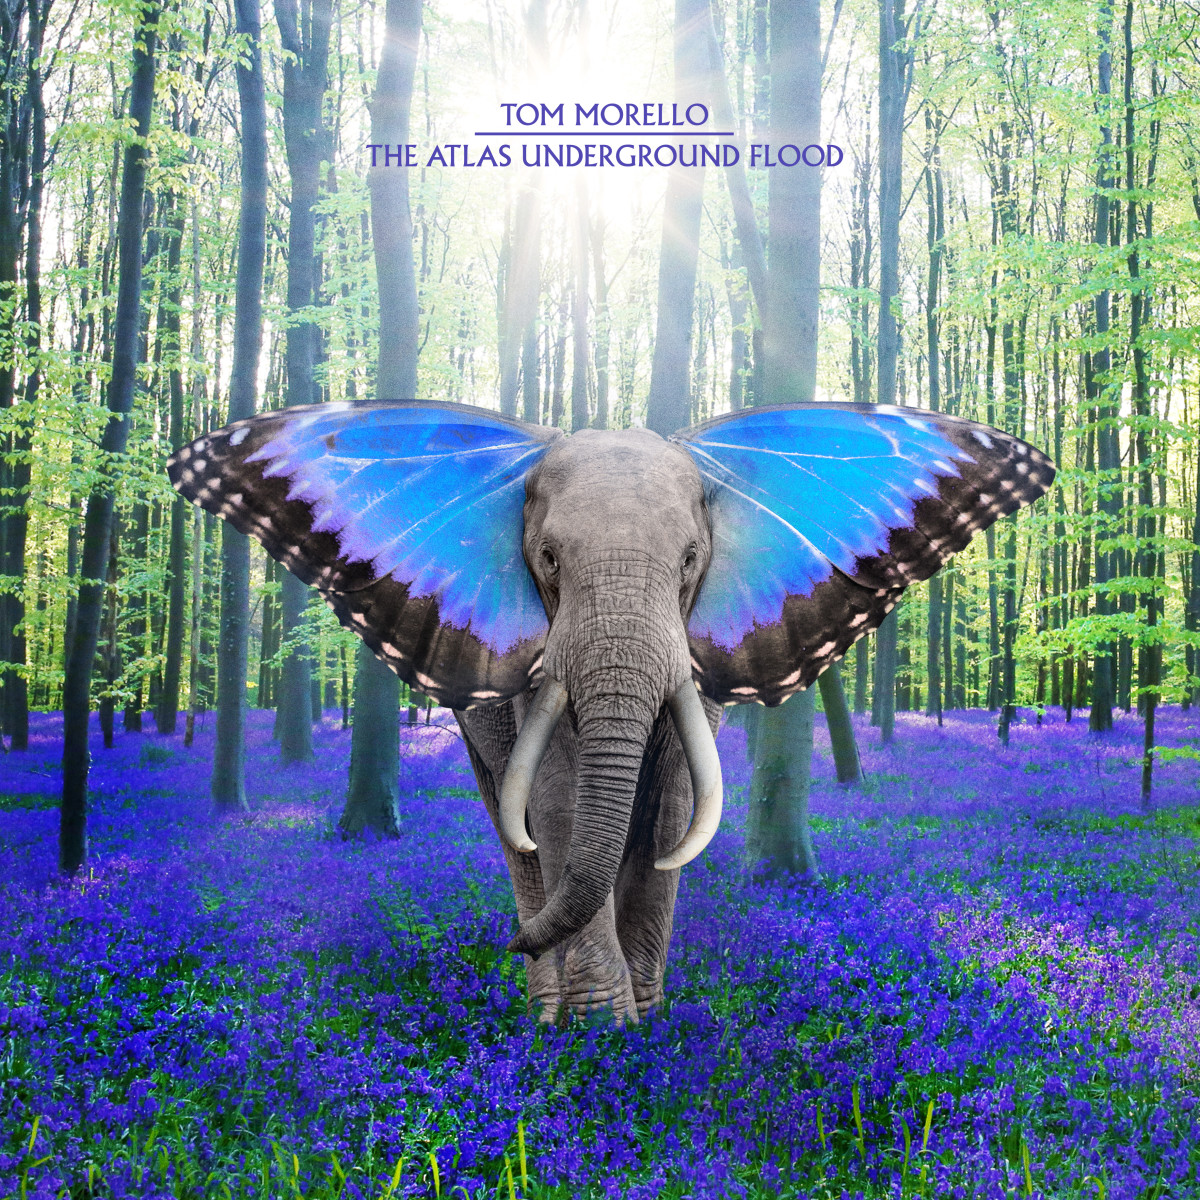 Cover of Tom Morello's "The Atlas Underground Flood" album.